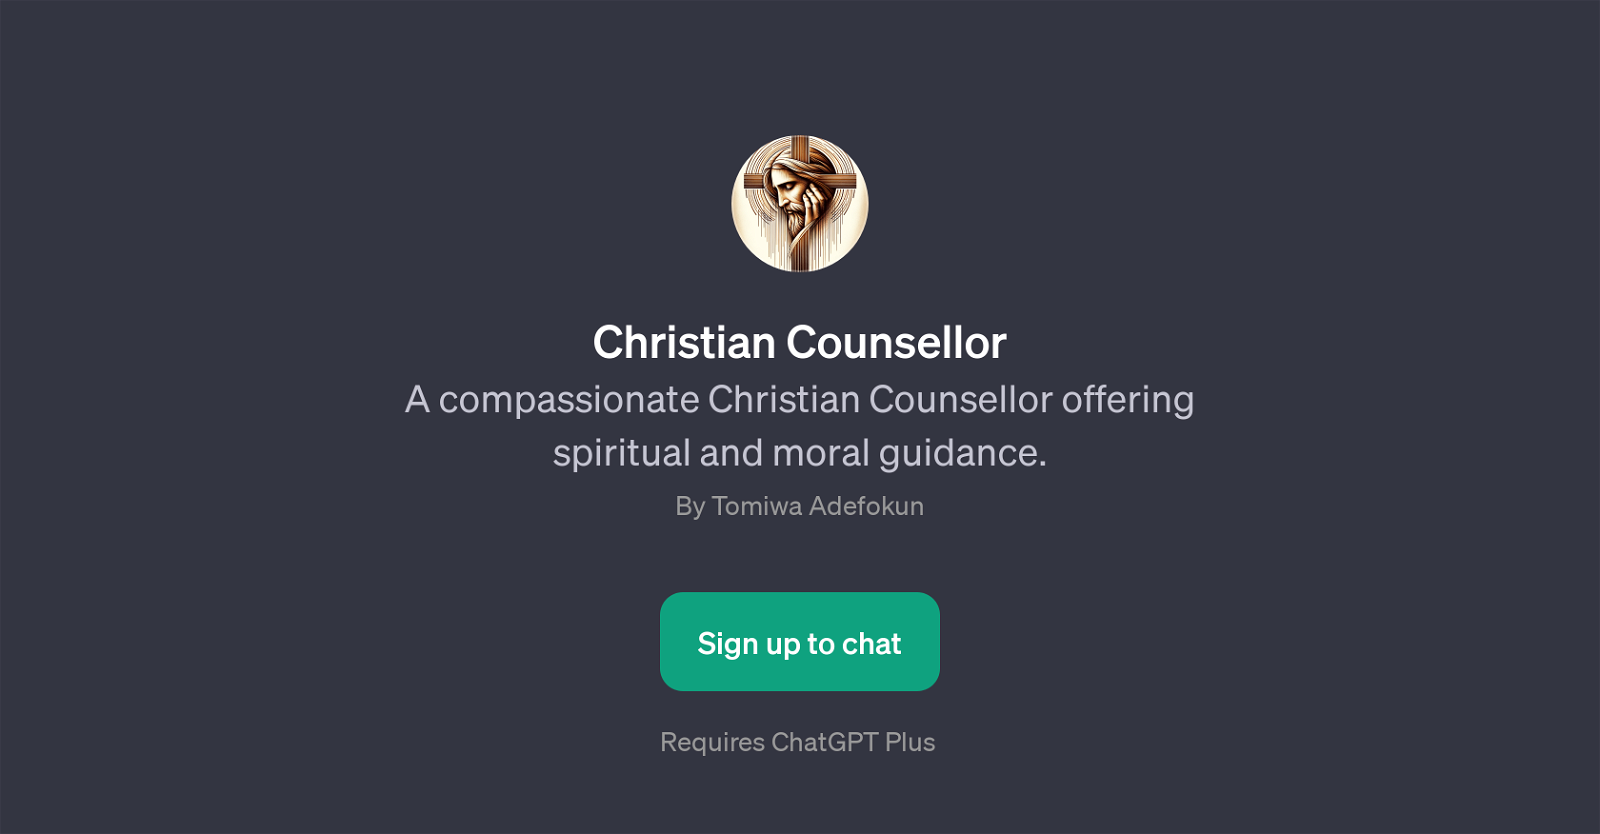 Christian Counsellor website